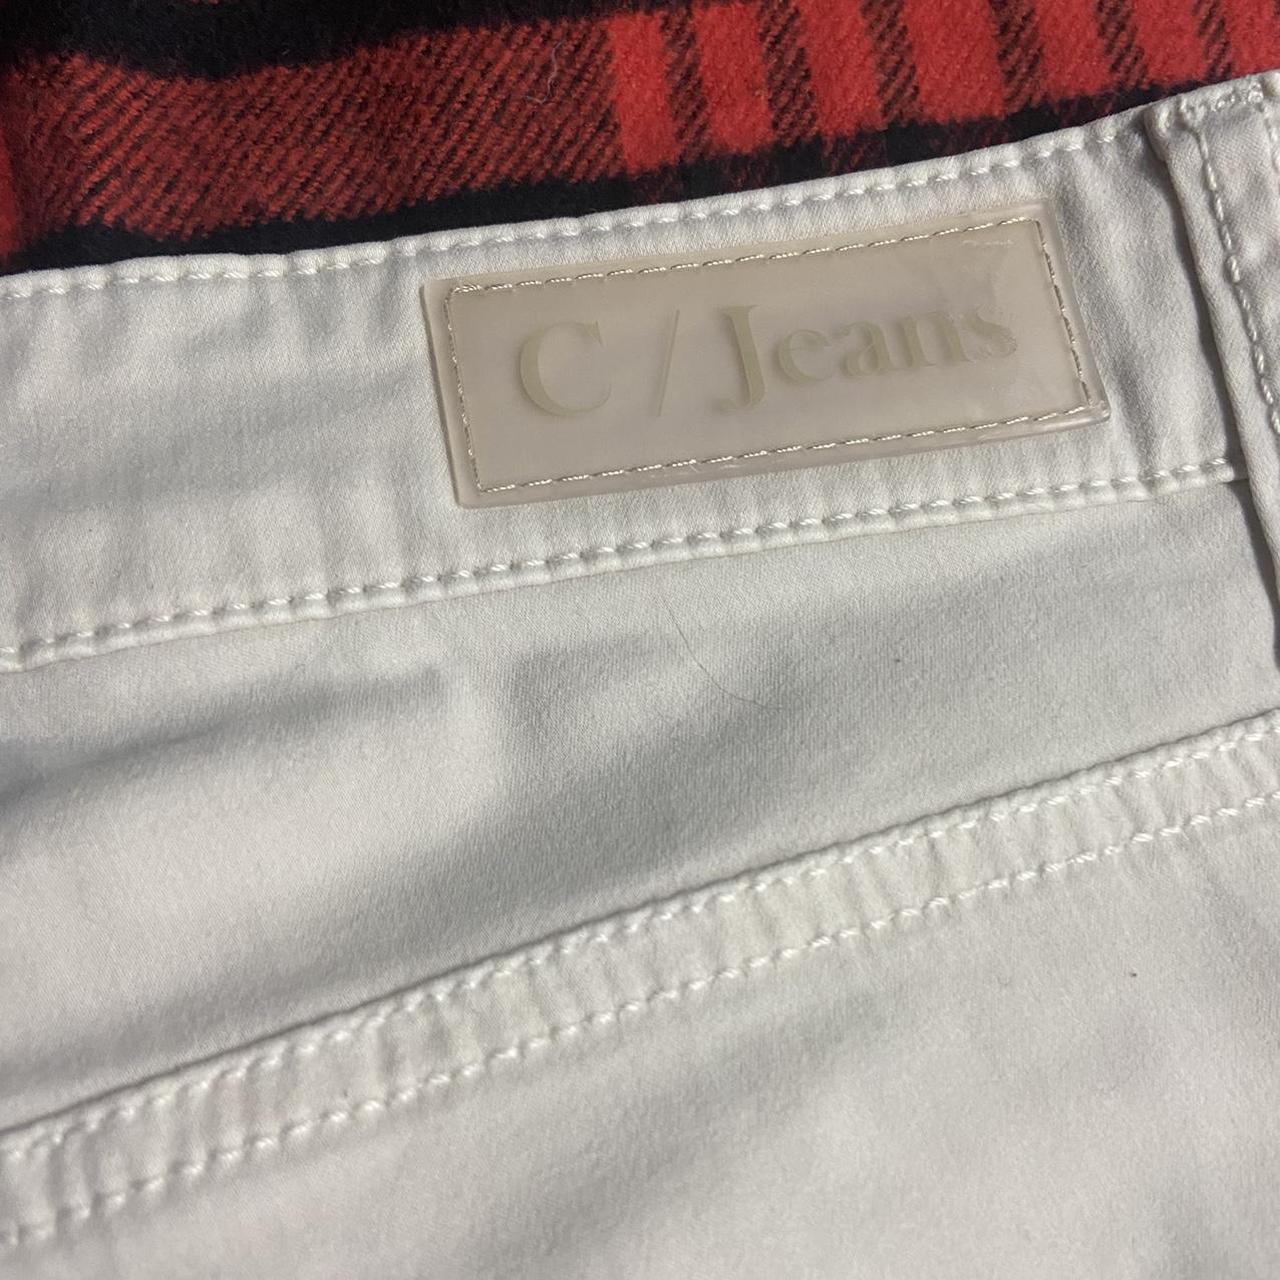 Cambio Women's White and Cream Jeans (4)